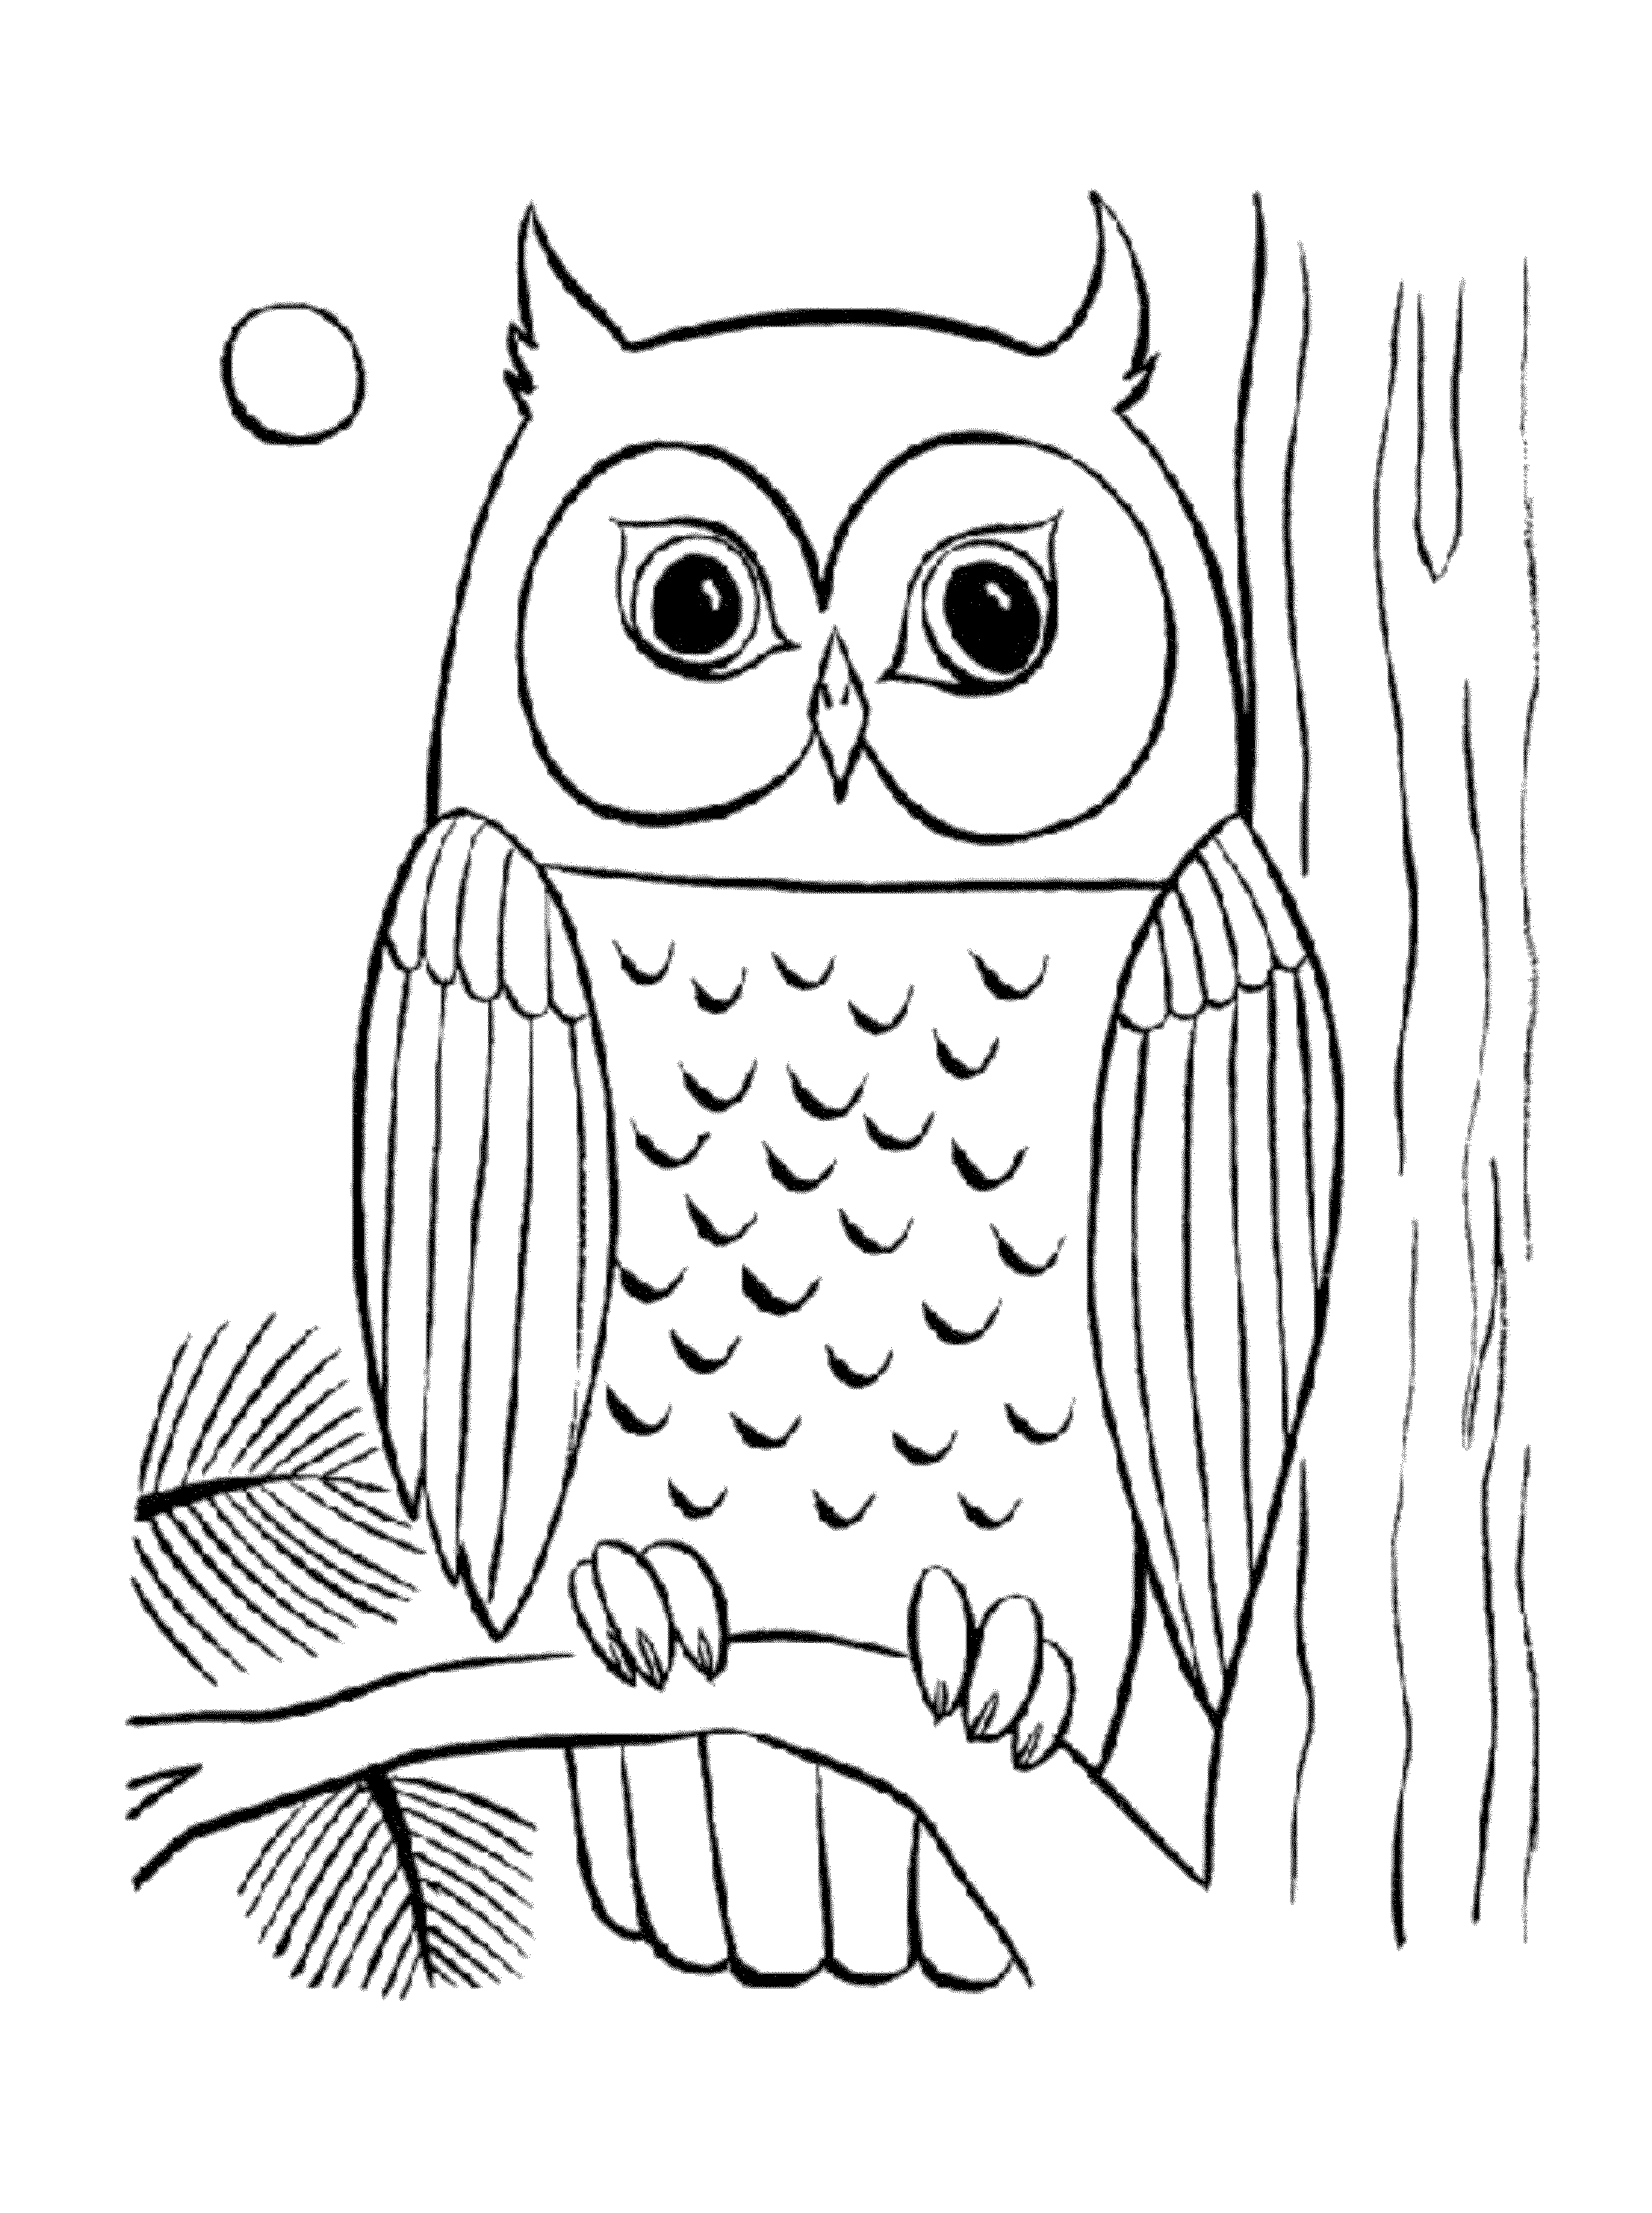 Free Owl Coloring Pages Image 55 - VoteForVerde.com